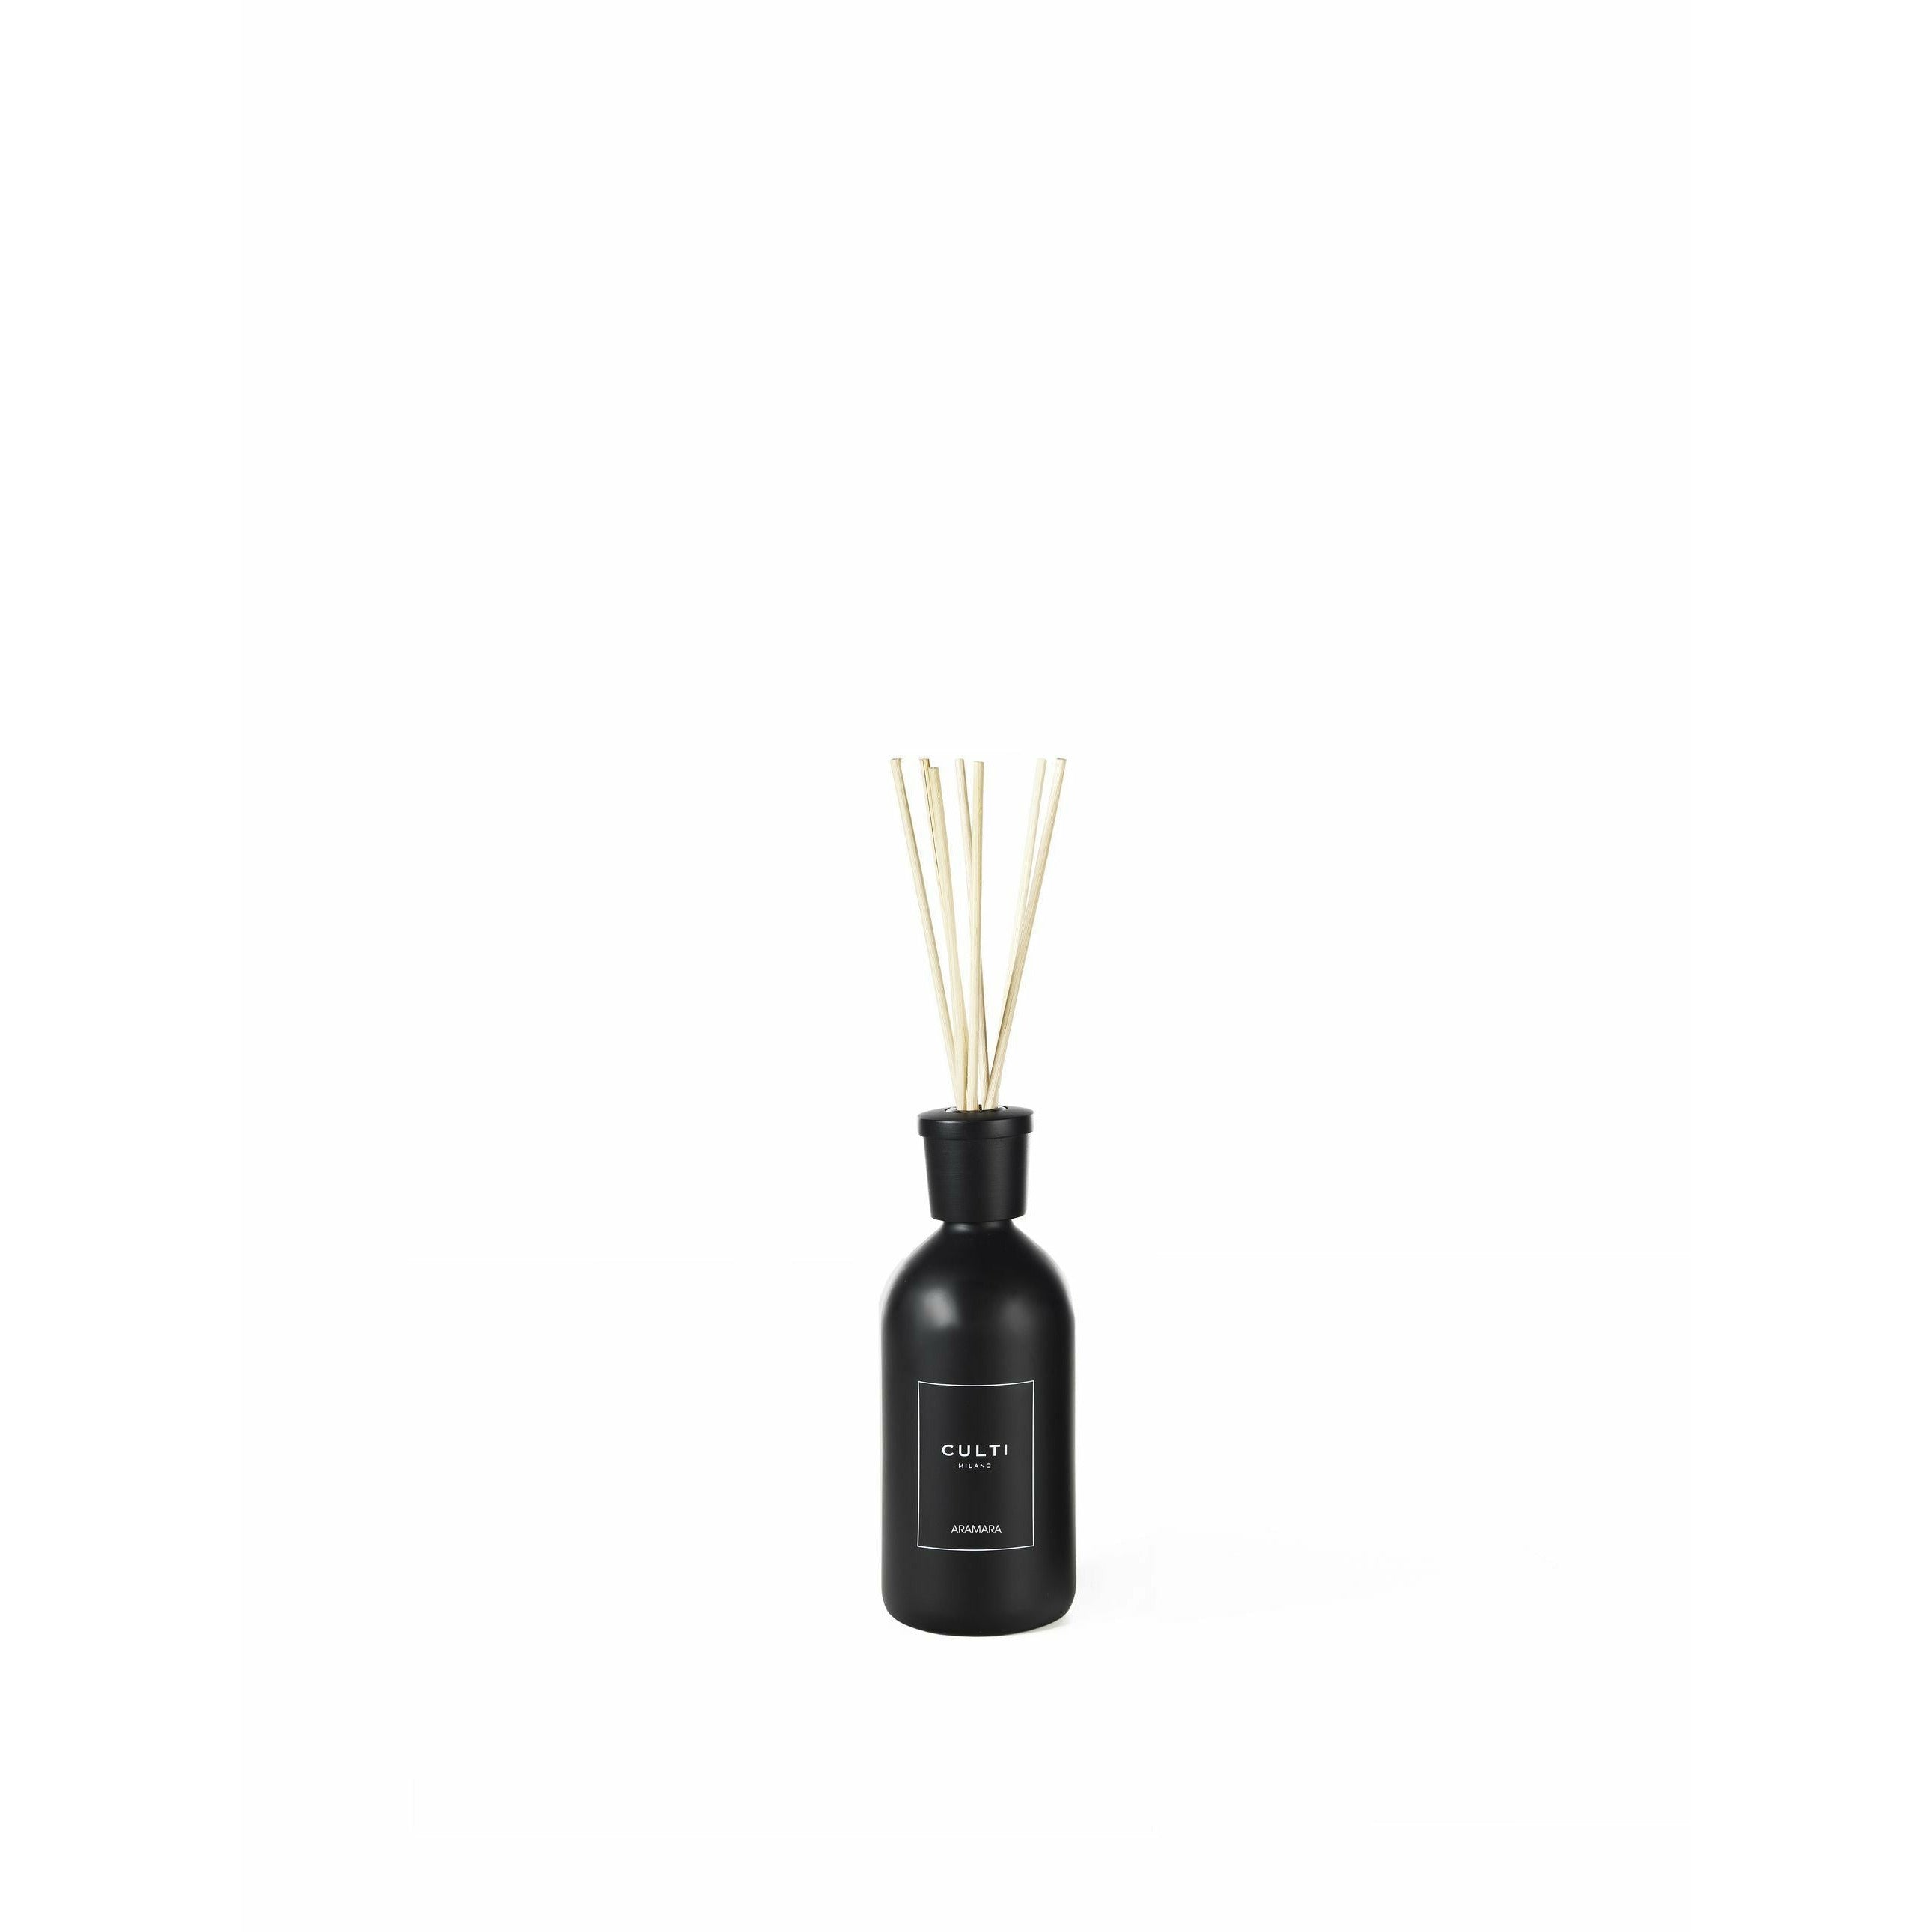 Culti Milano Stile zwart label geur diffuser Aramara, 500 ml